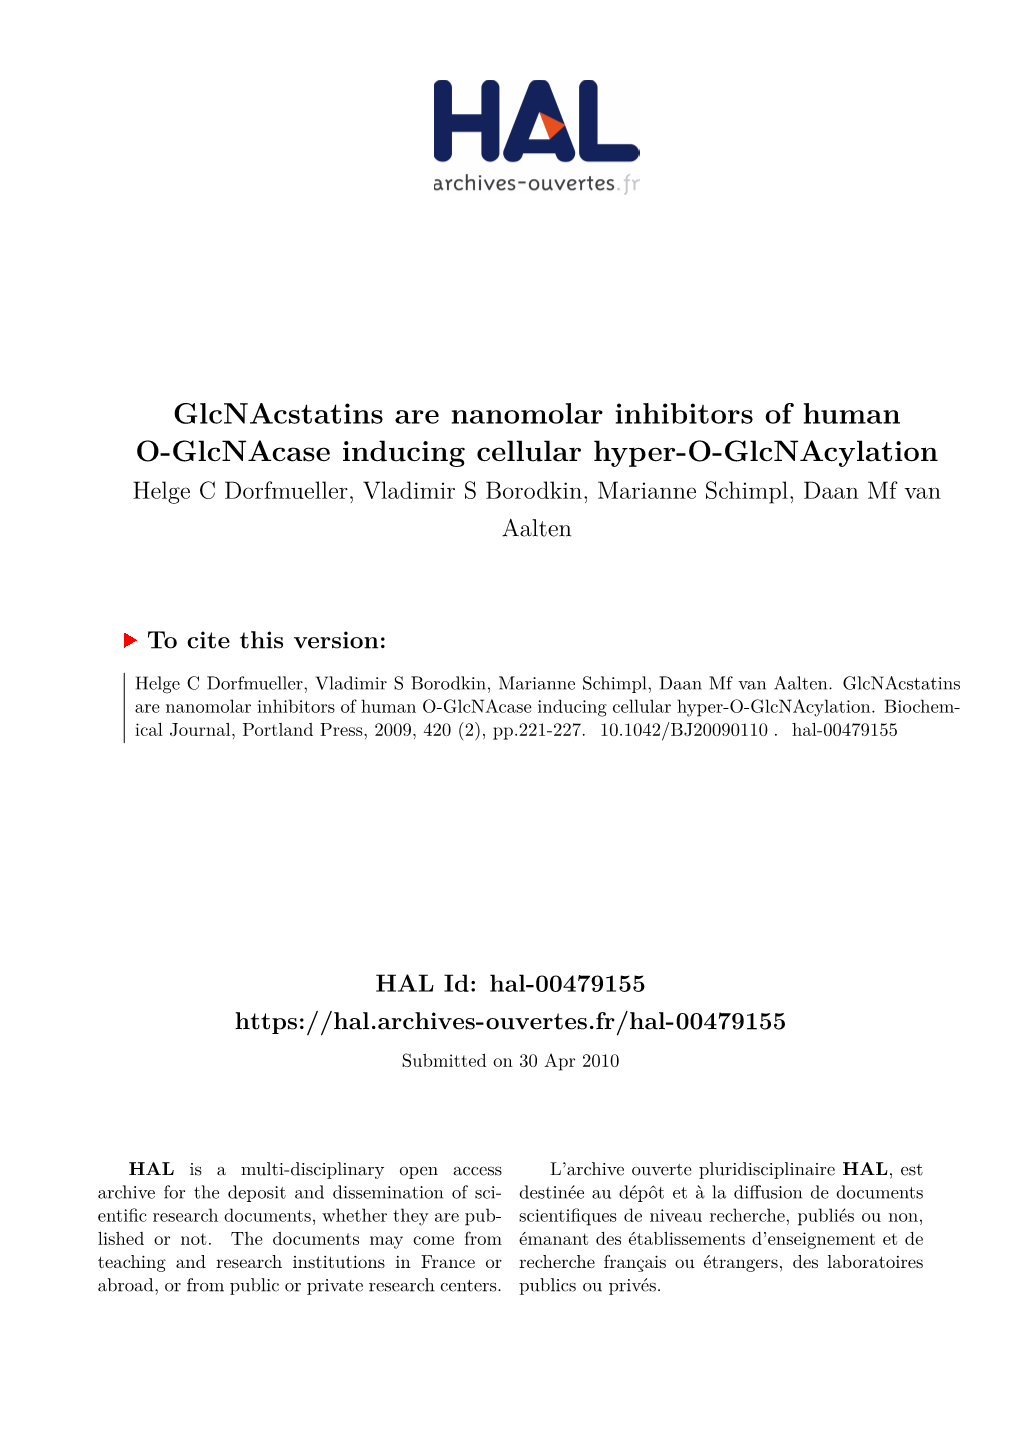 Glcnacstatins Are Nanomolar Inhibitors of Human O-Glcnacase